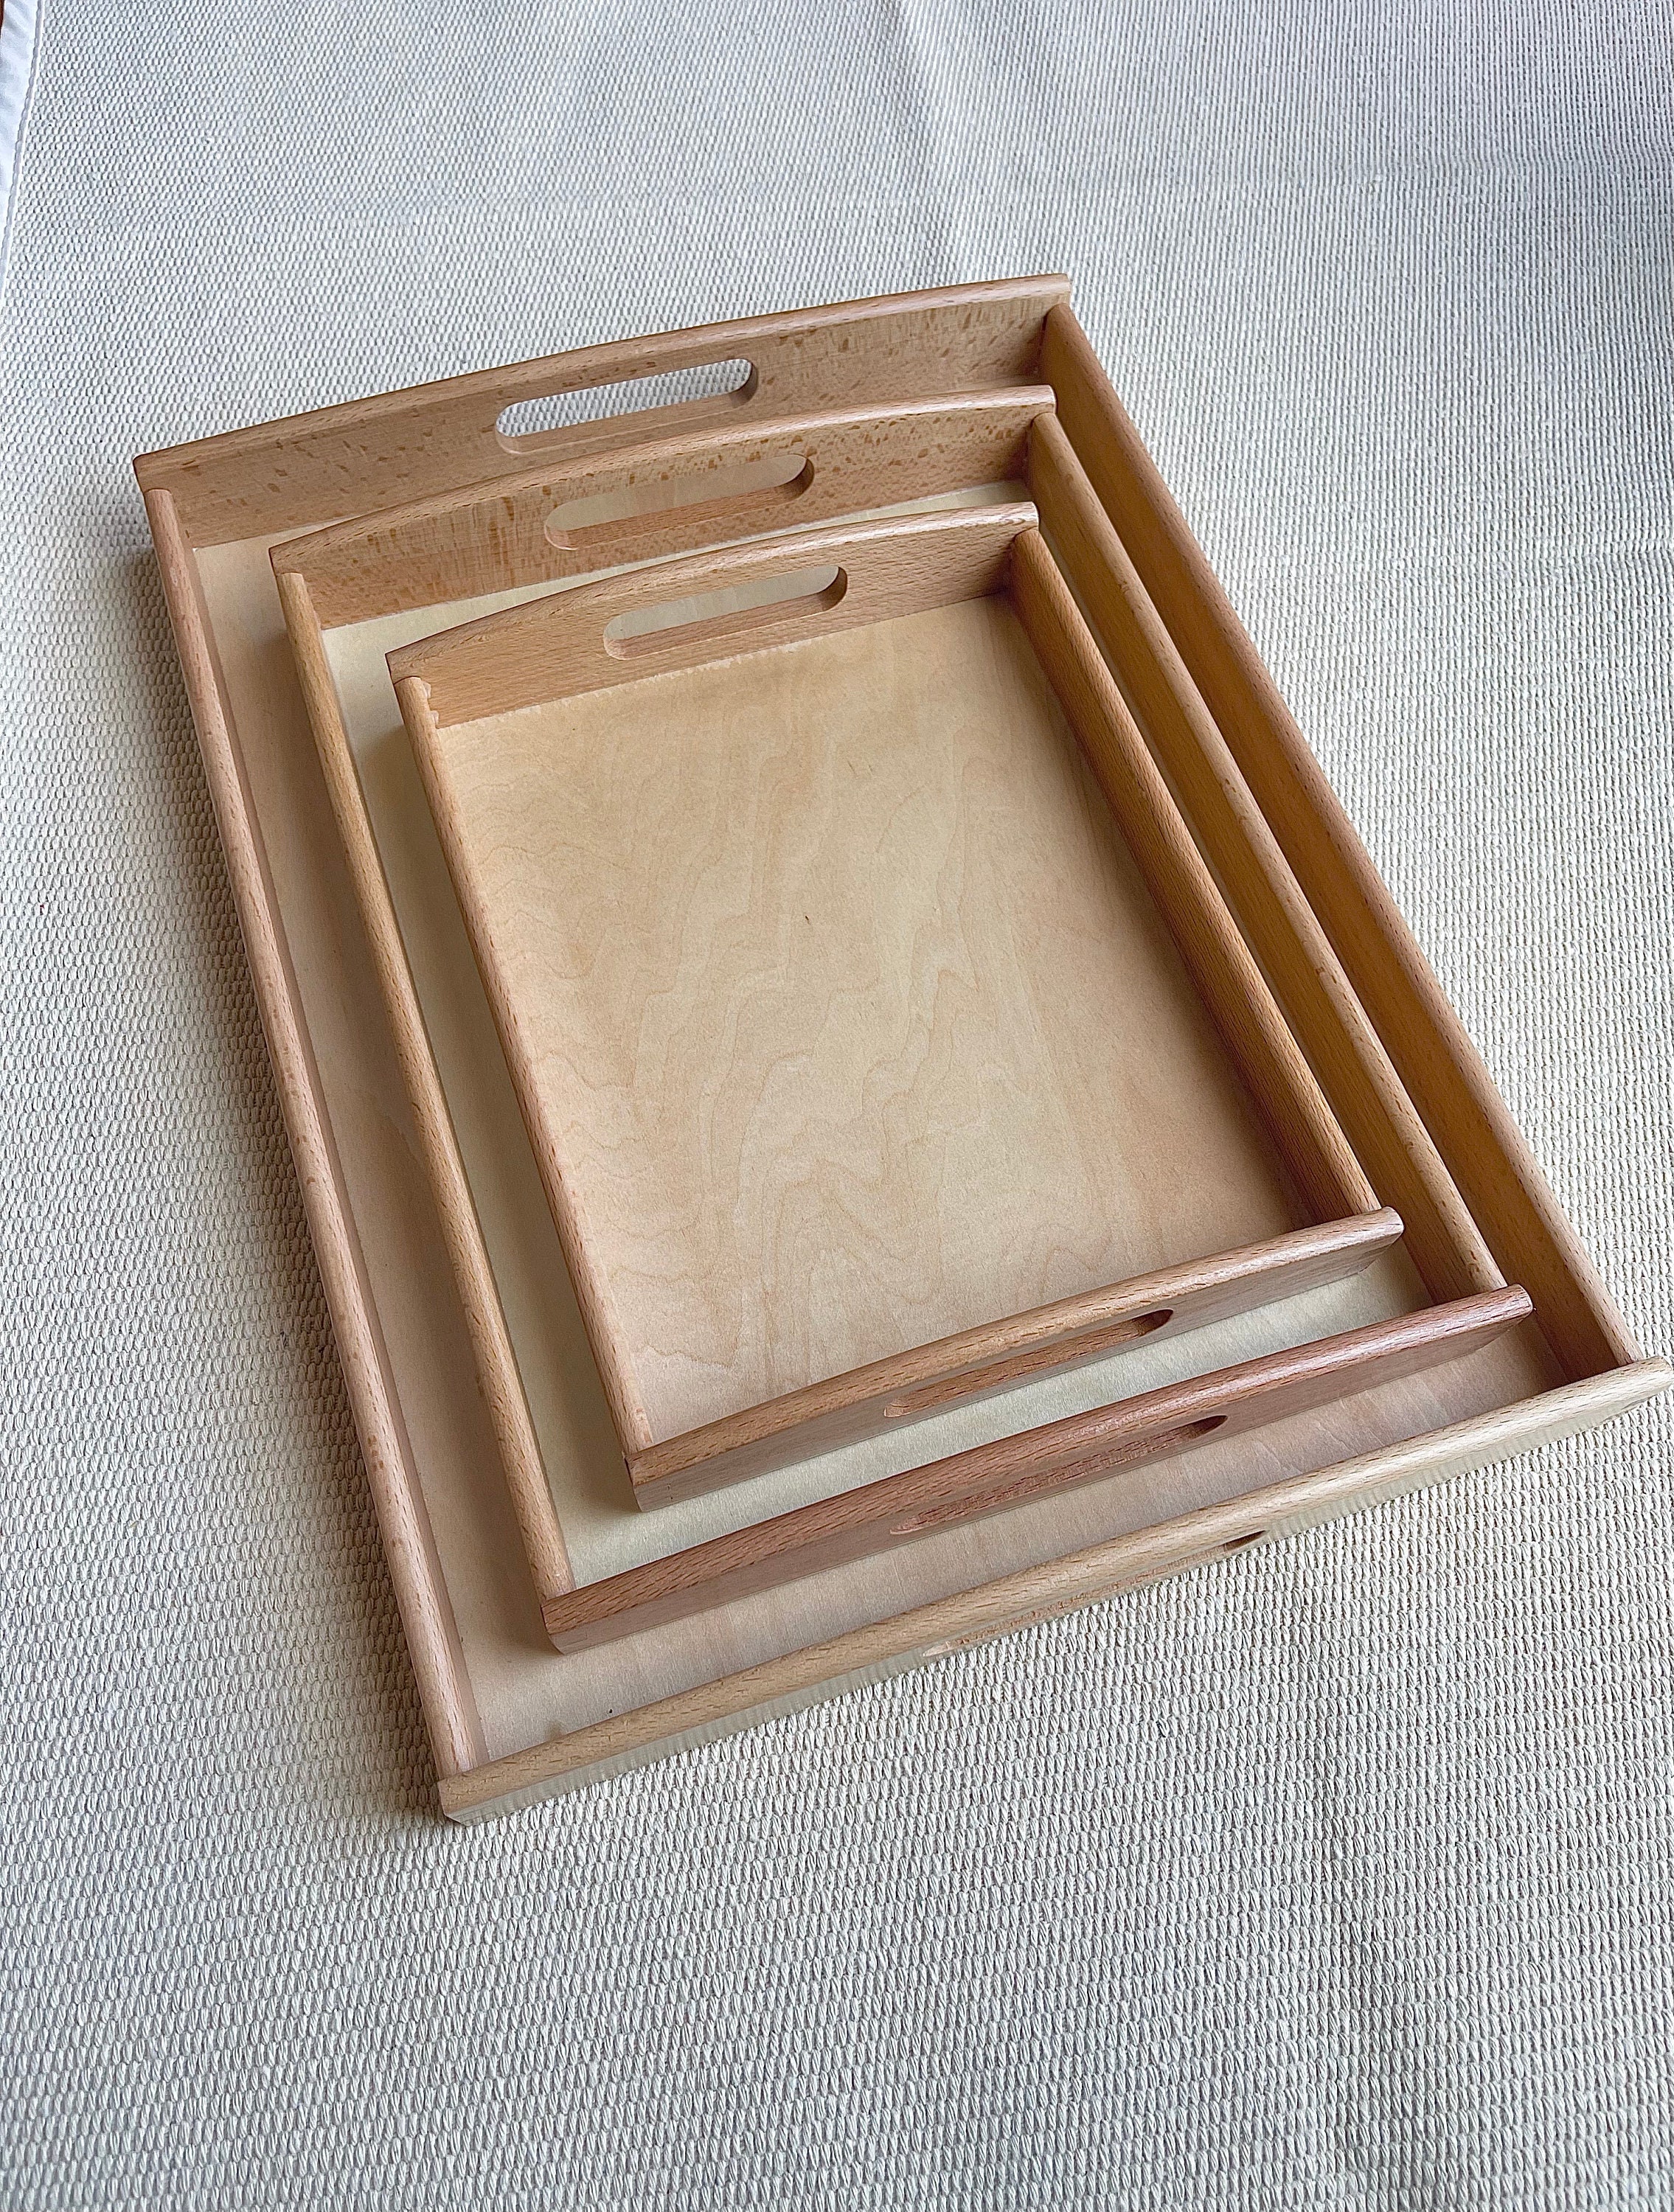 Wooden Tray With Handle Montessori Materials Educational Display Tray  Sorting Tray Preschool Homeschool Classroom 